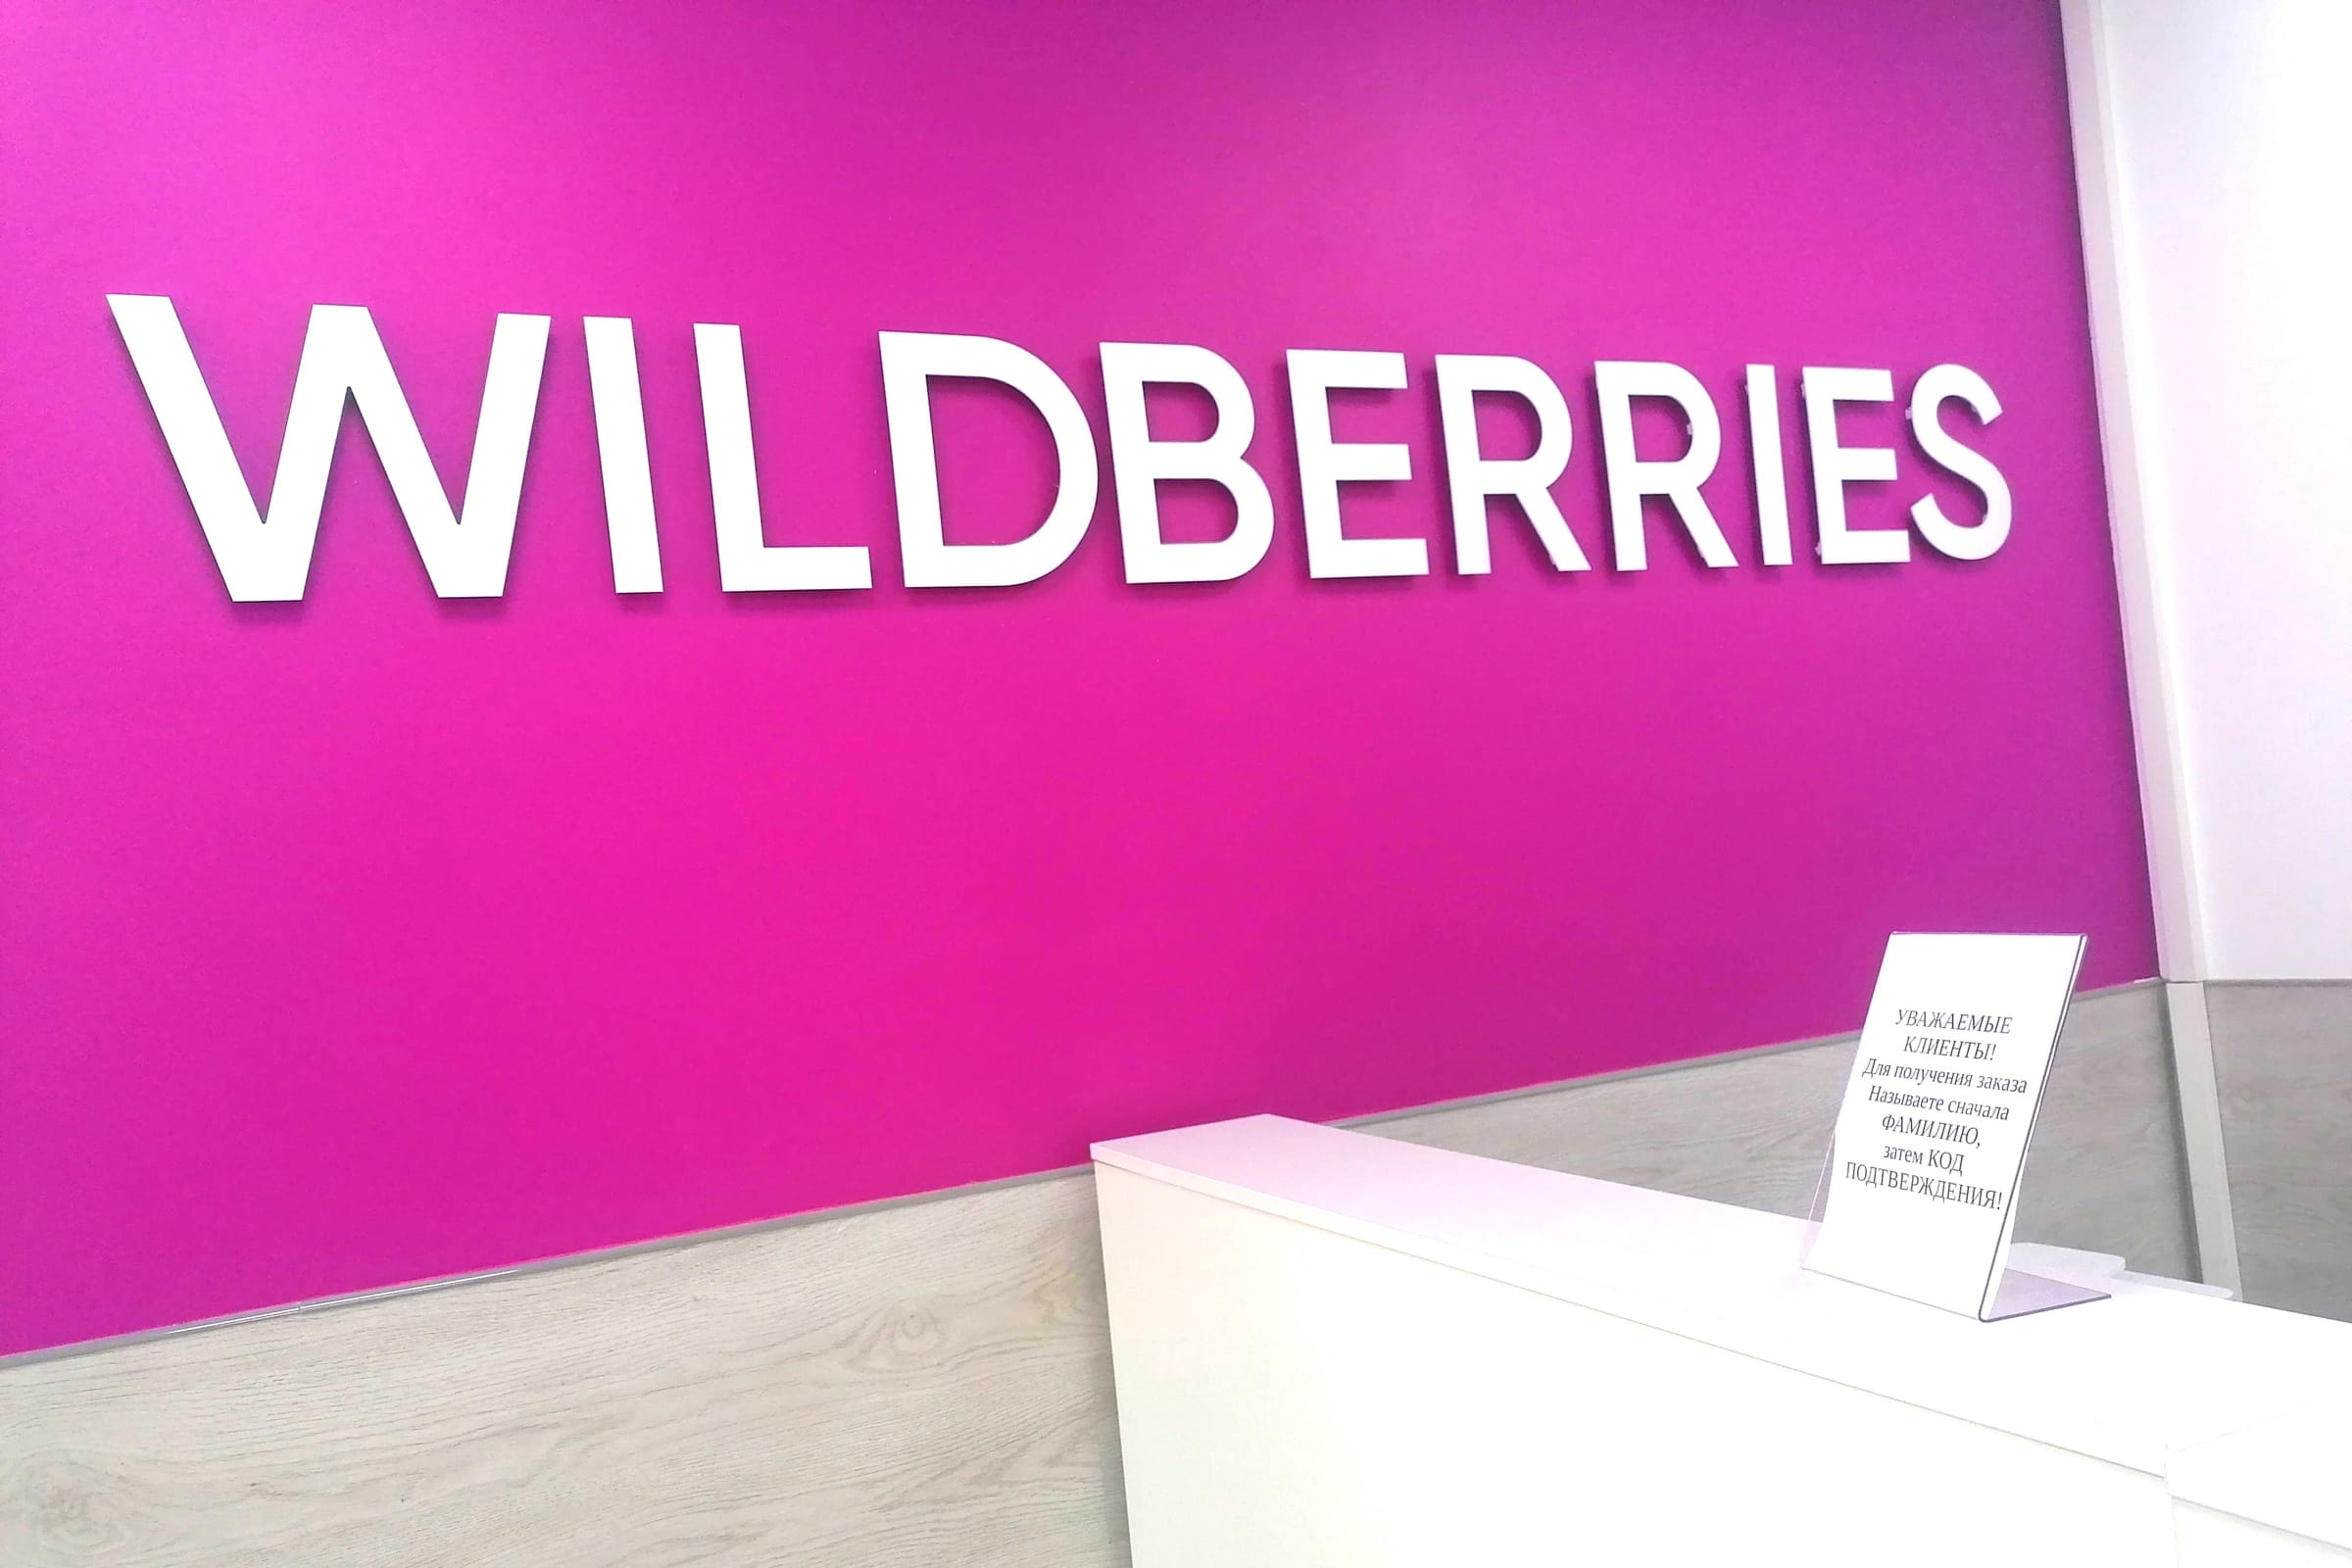 Распродажа на валдберисе. Вайлдберриз. Wildberries логотип. Вайлдберриз магазин. Wildberries баннер.